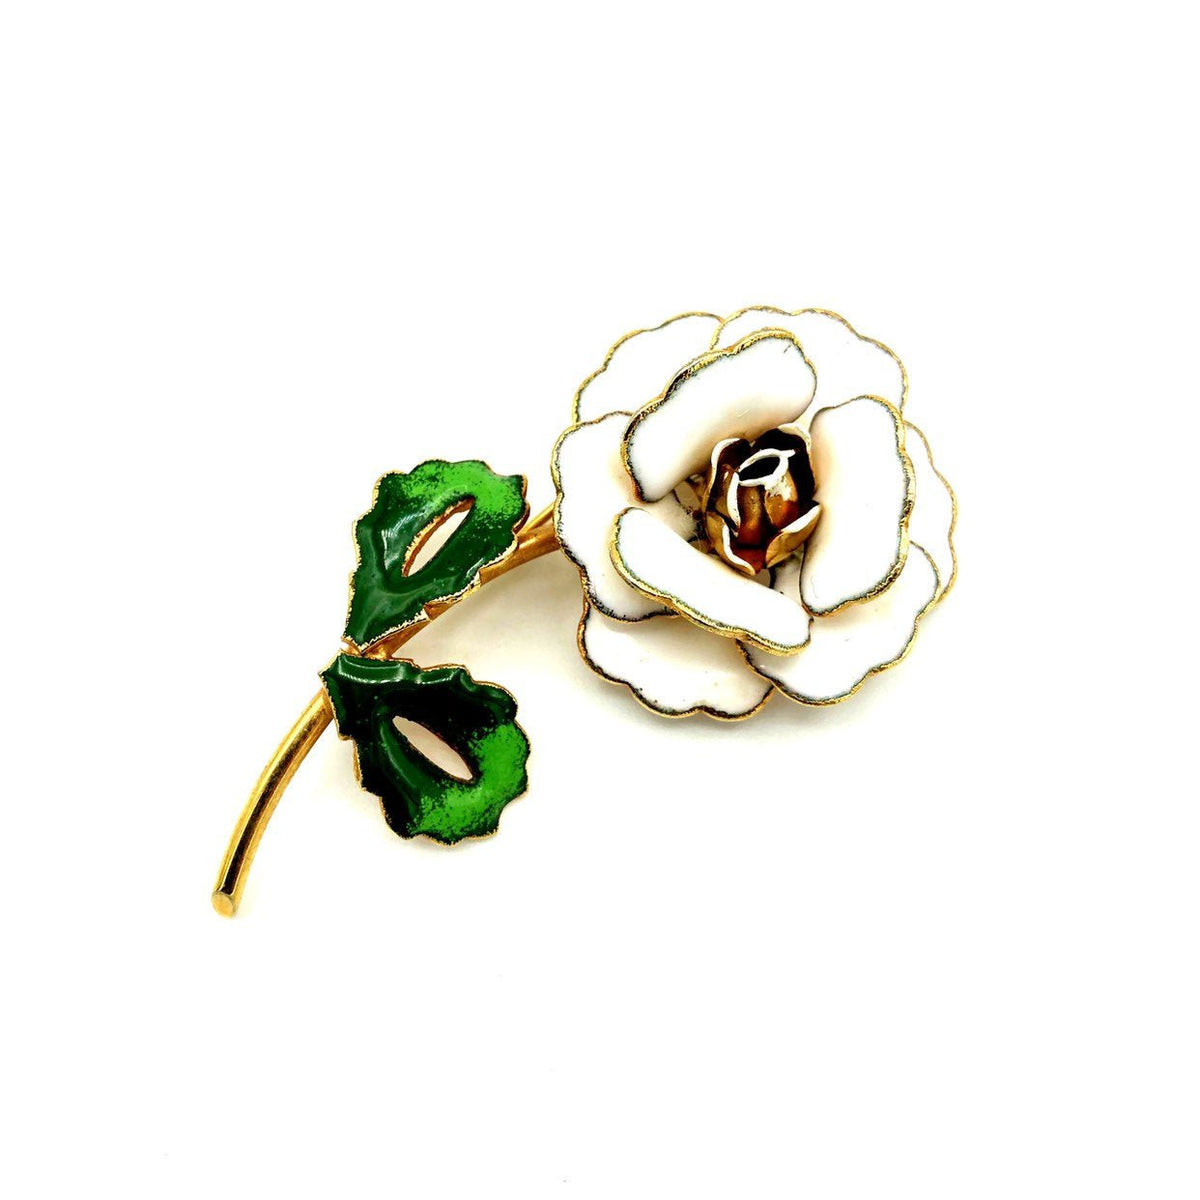 White Enamel Long Stem Flower Vintage Brooch - 24 Wishes Vintage Jewelry